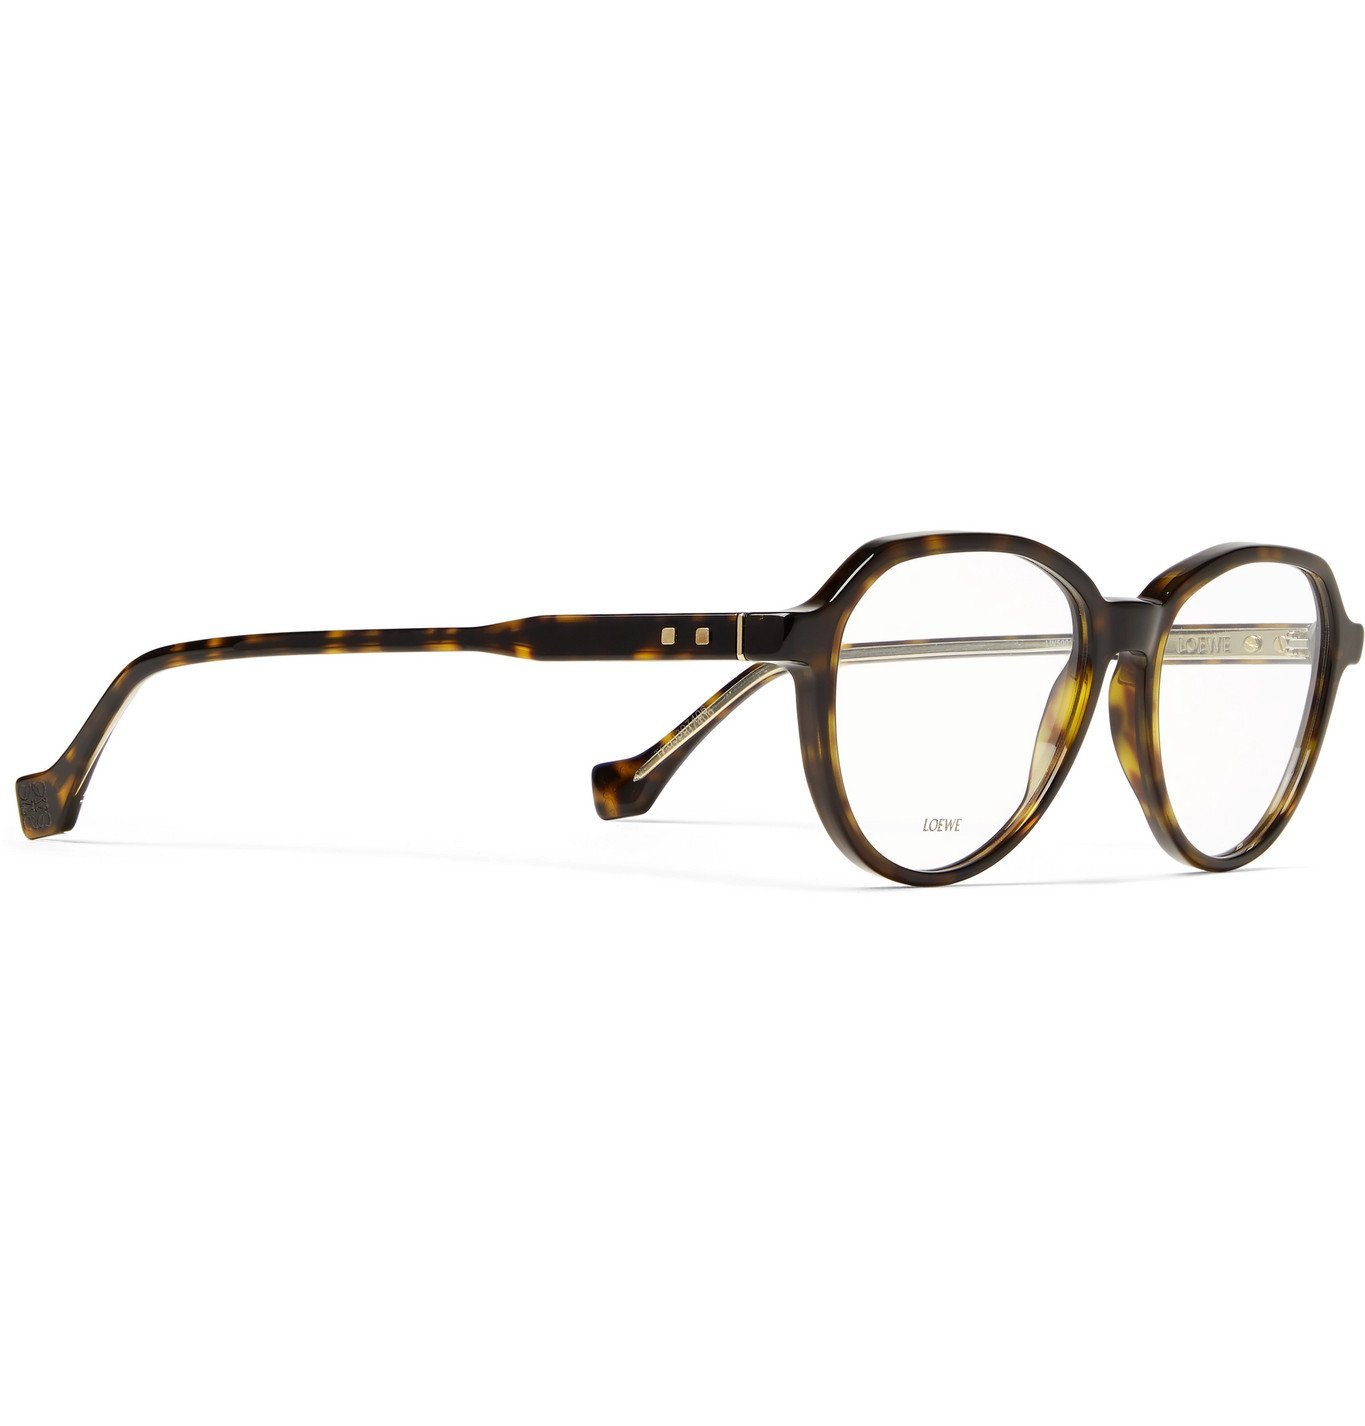 loewe glasses frames